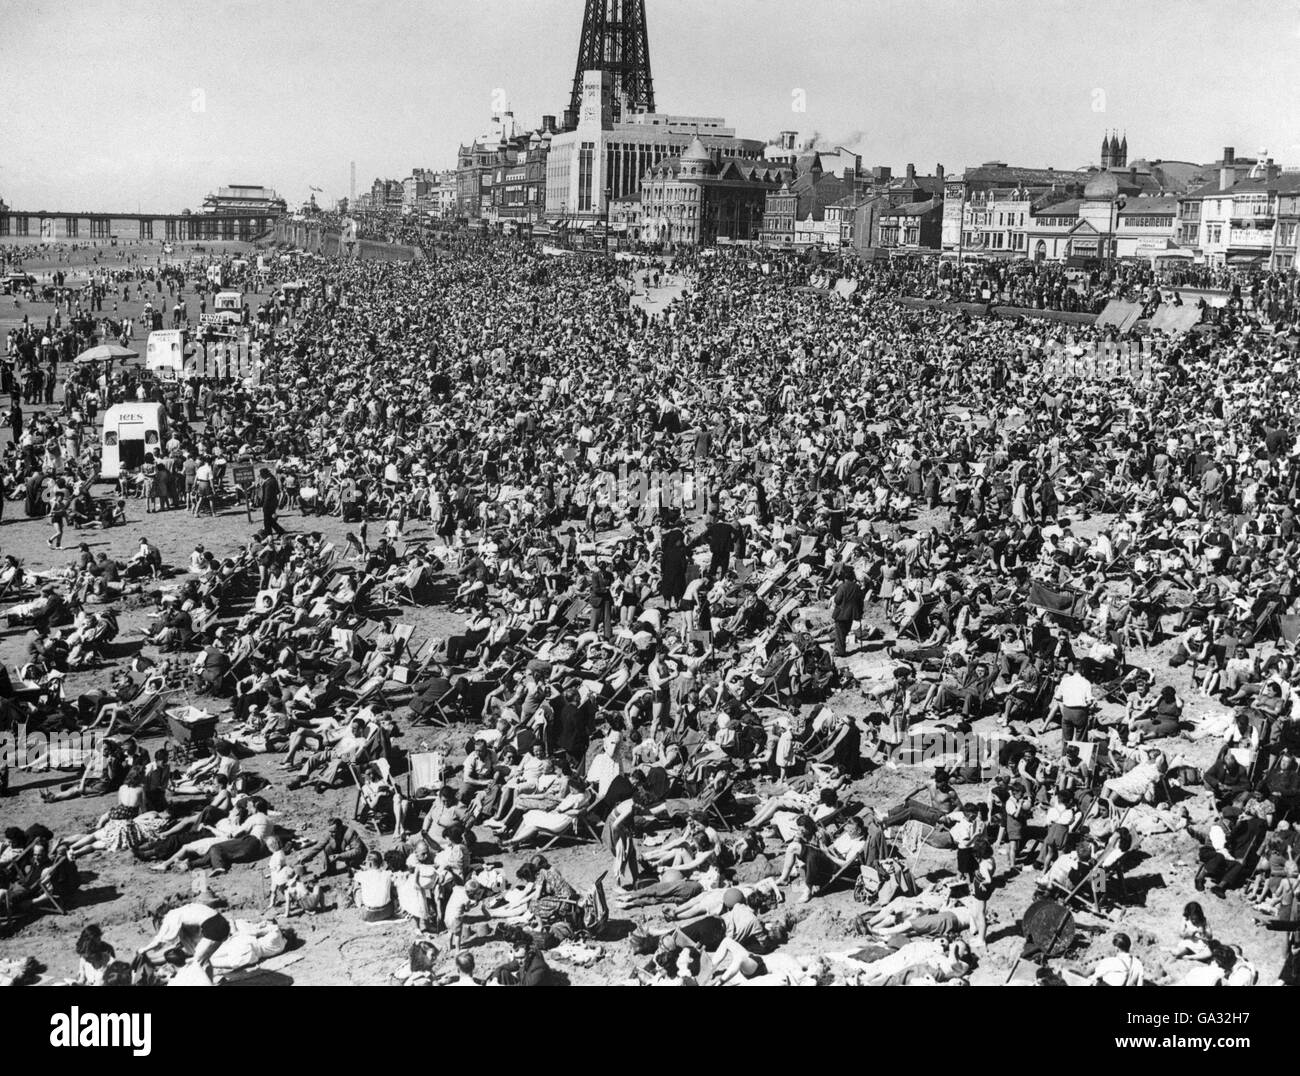 British Holidays - The Seaside - Blackpool - 1948. Crowds on the beach at Blackpool. Stock Photo